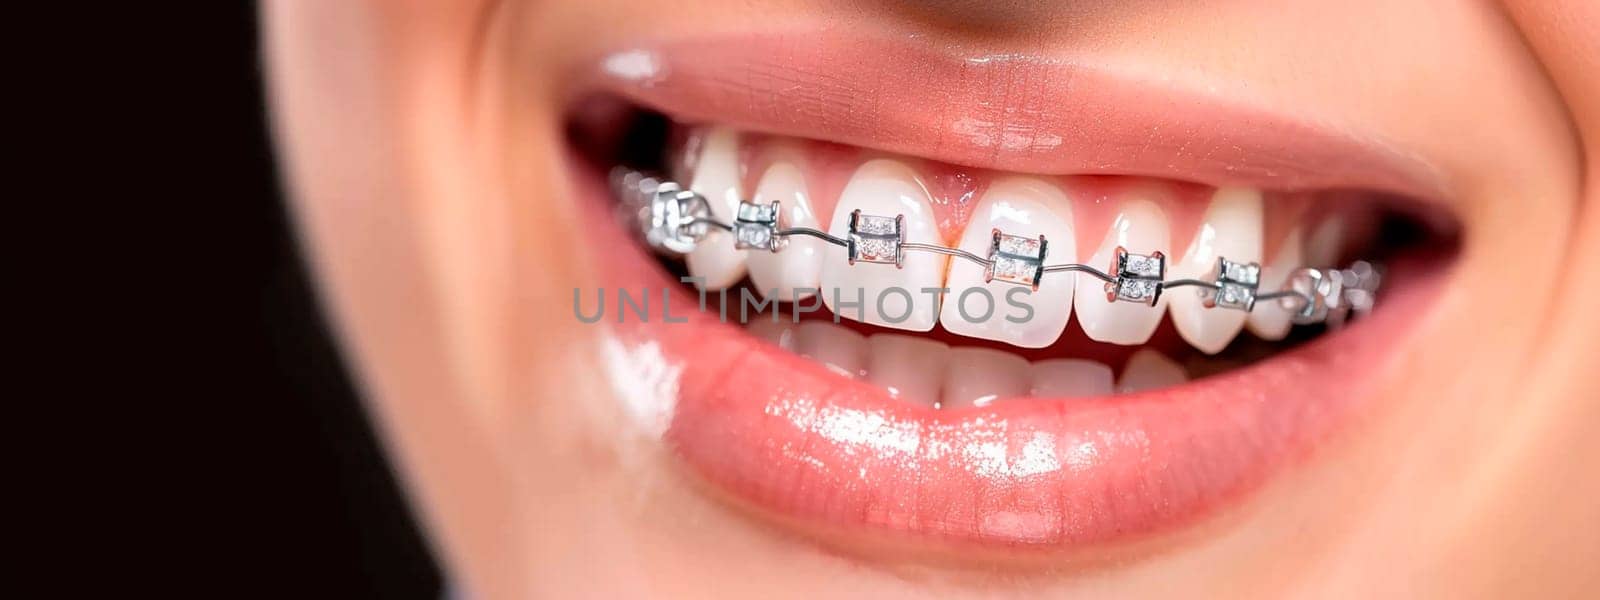 Braces on teeth treated by dentist. Selective focus. by yanadjana